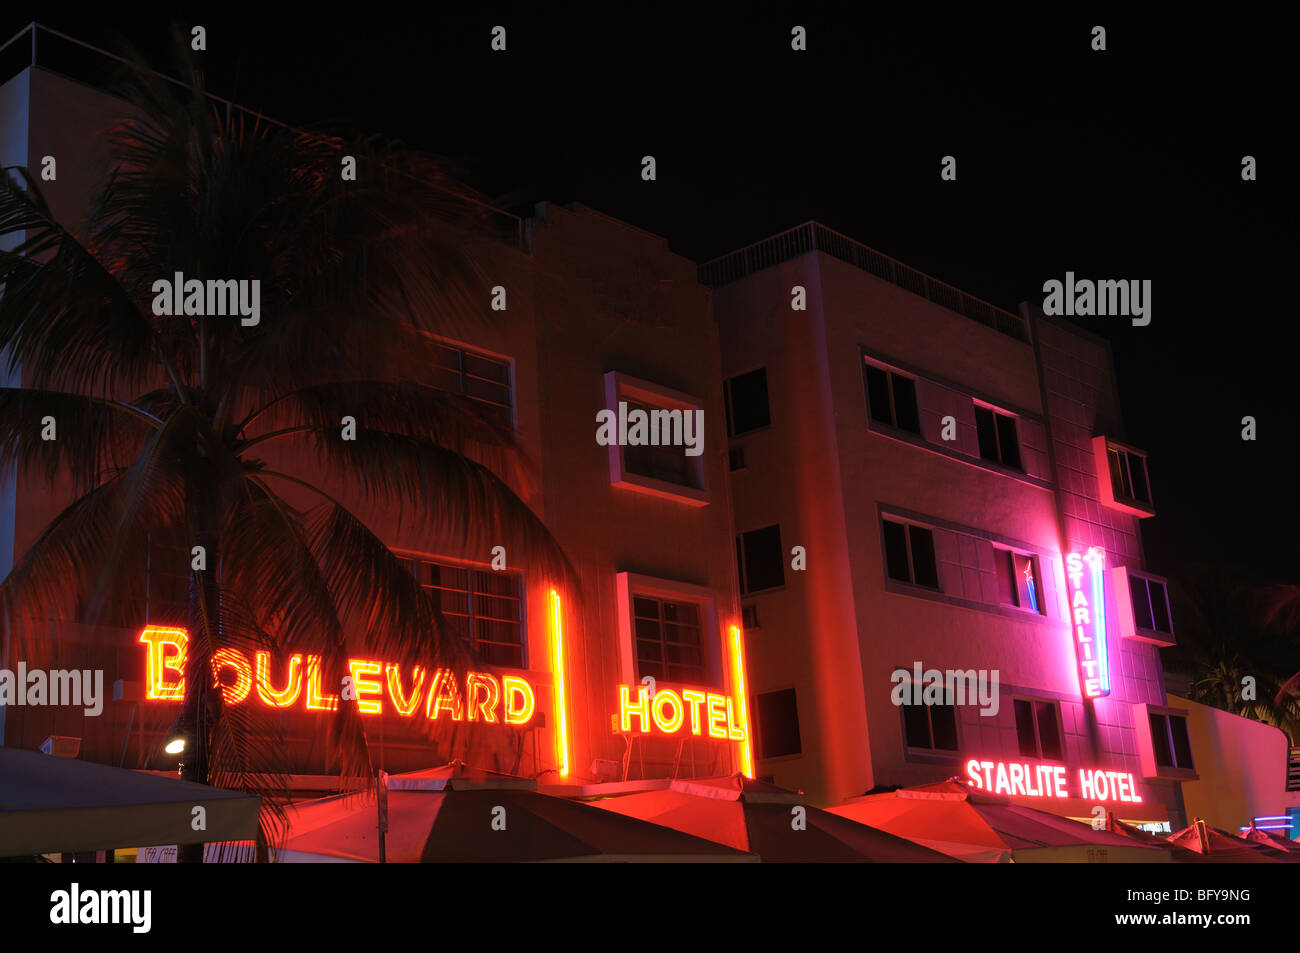 Miami Art Deco District Hotels illuminated at night Stock Photo Alamy